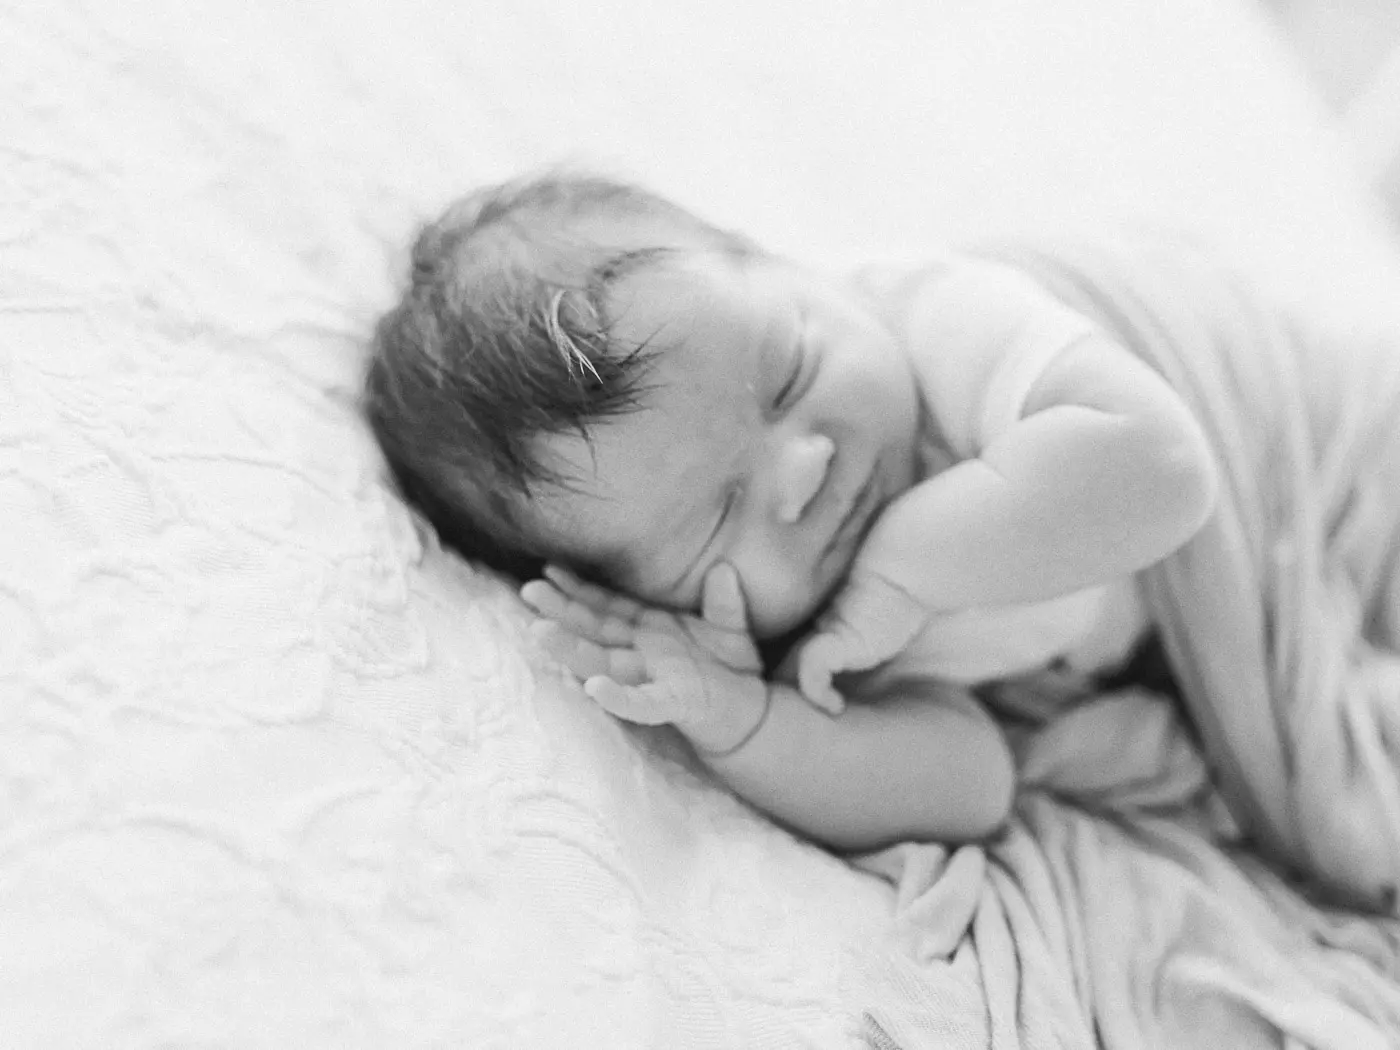 Black and white portrait of newborn baby boy